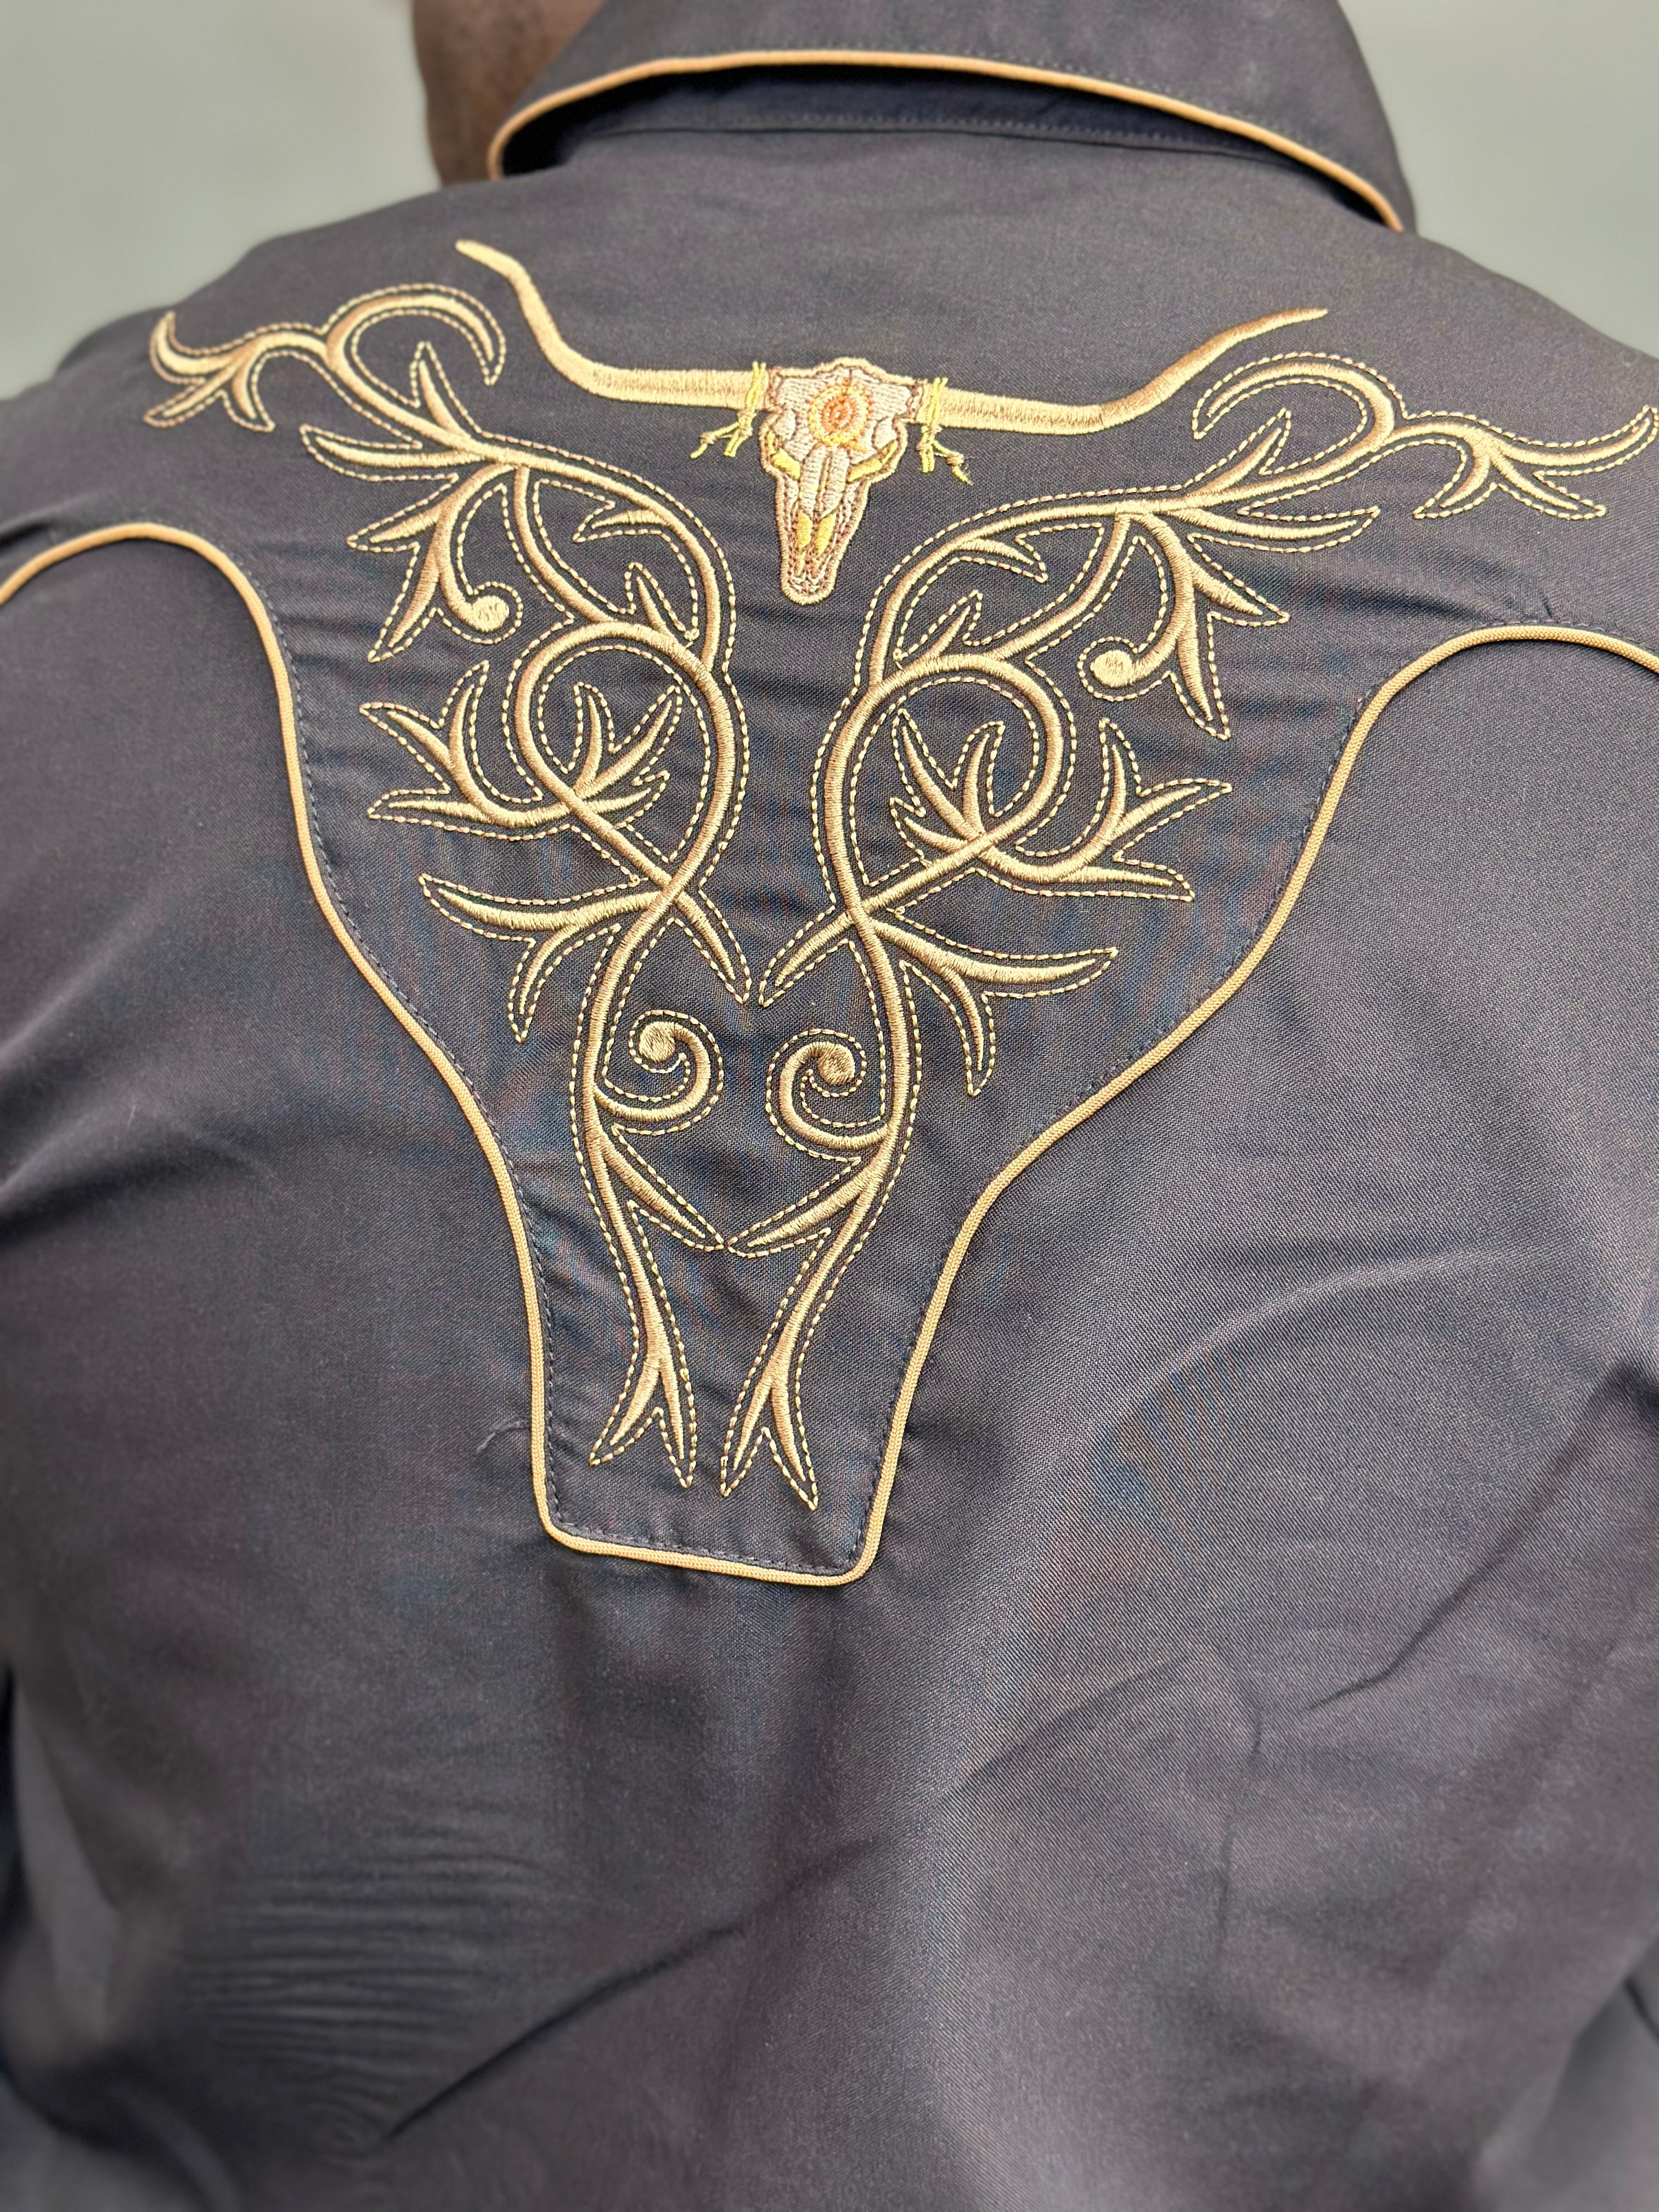 Rangers Legend Original Black Charro Tan Embroidered